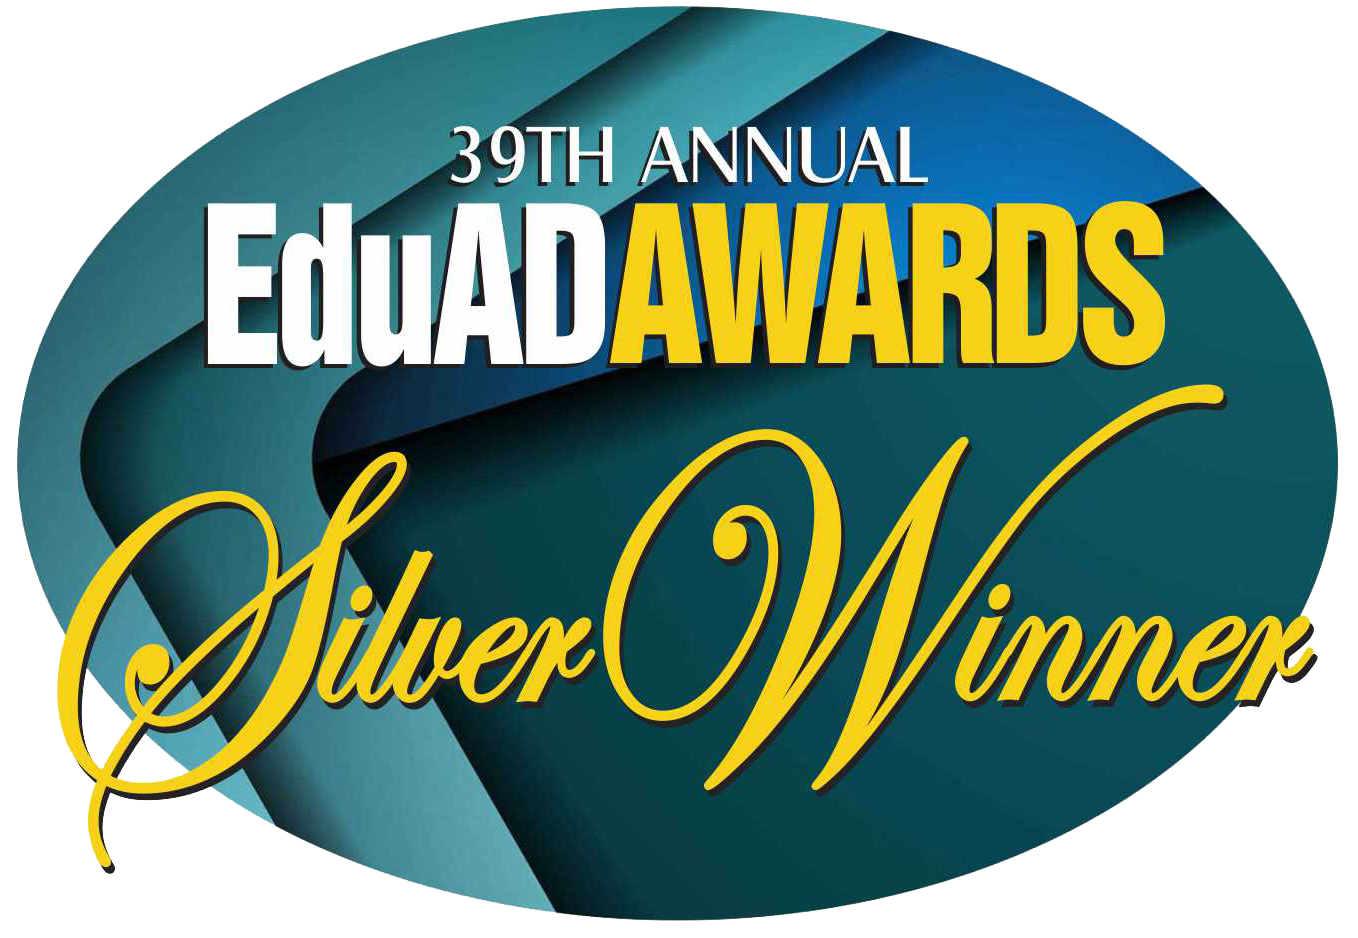 Educational Advertising Awards silver winner logo